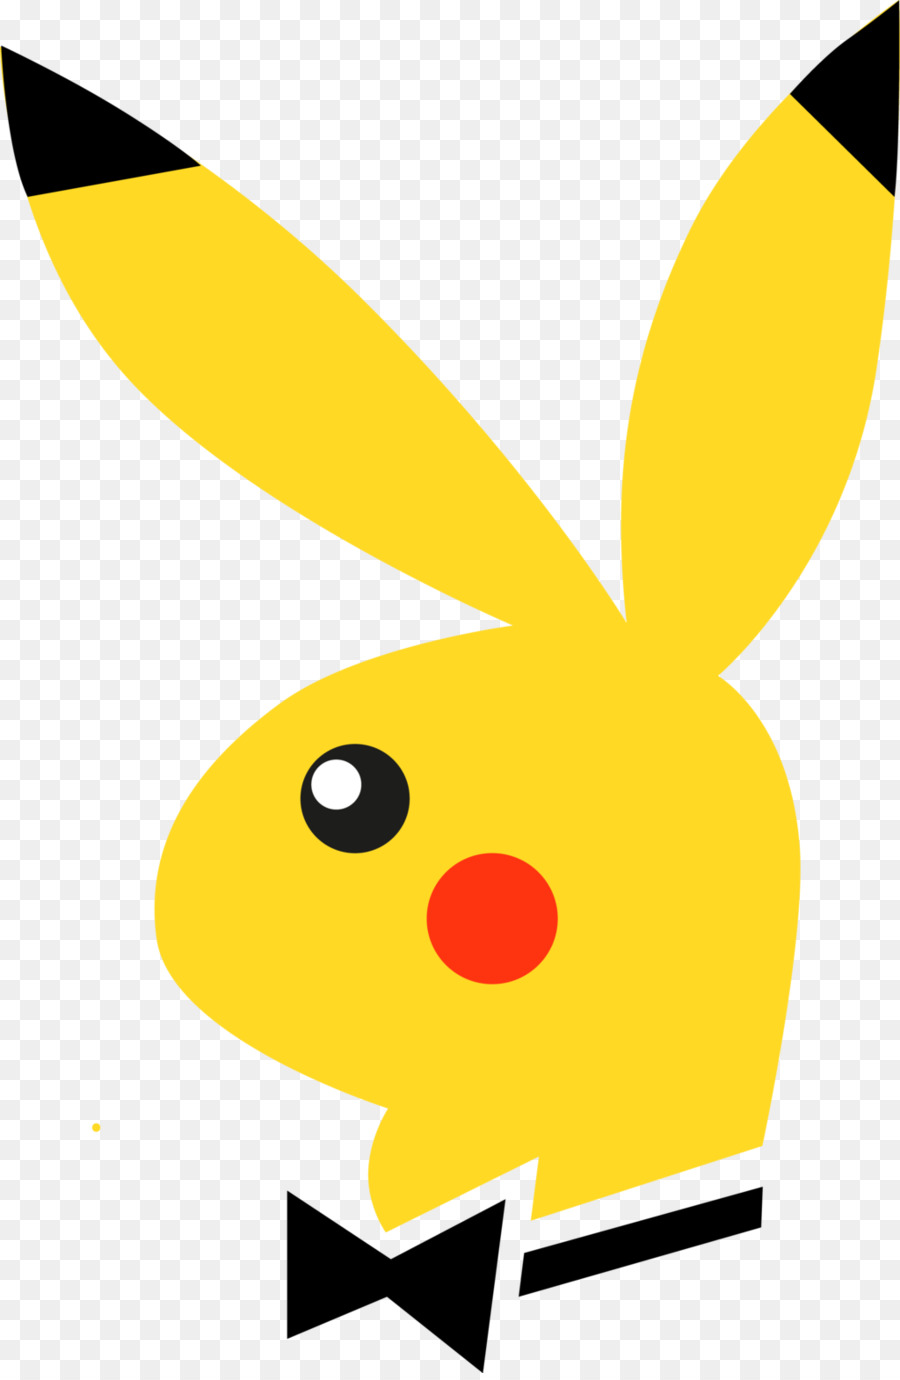 Playboy Bunny Logo Clip art - pikachu png download - 1024*1562 - Free Transparent Playboy png Download.